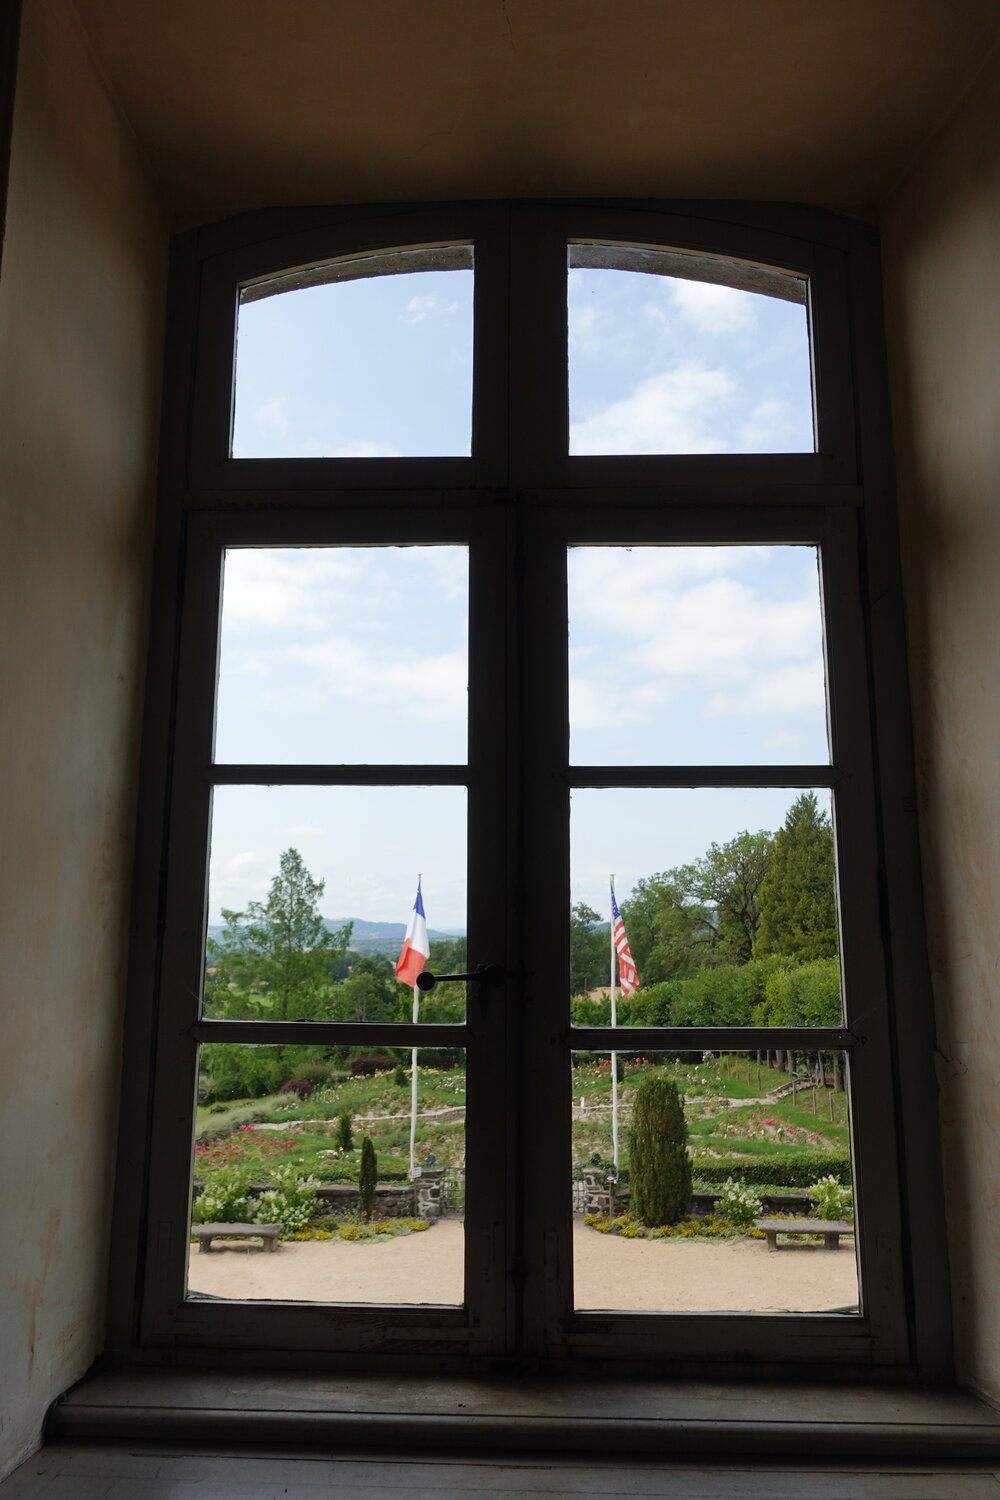 Views of Rose Garden from Chateau Chavaniac, Chavaniac-Lafayette, Auvergne, France